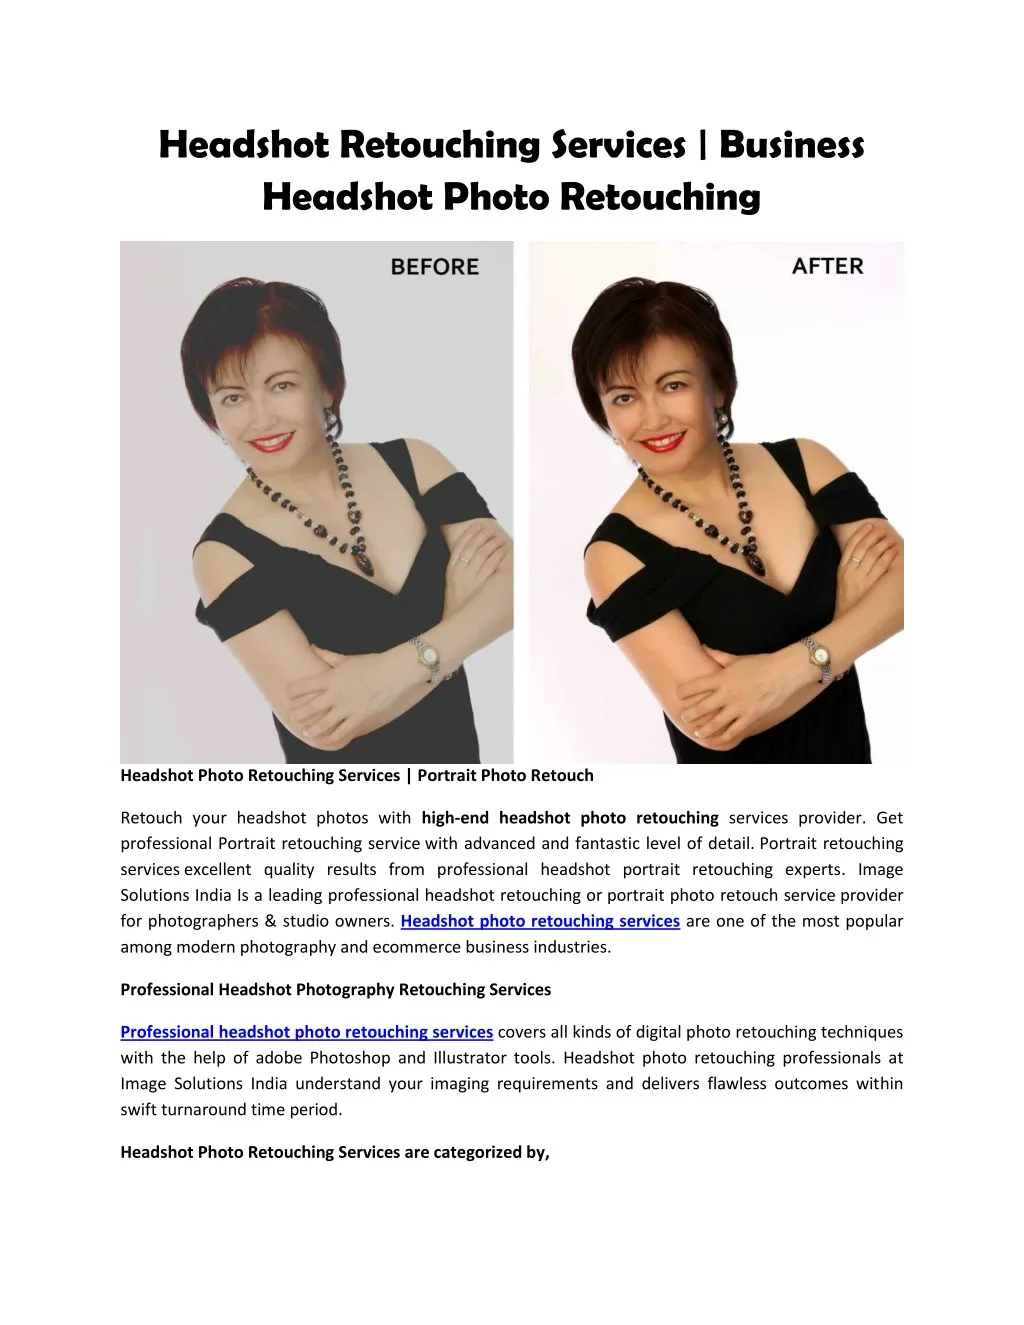 headshot retouching services business headshot